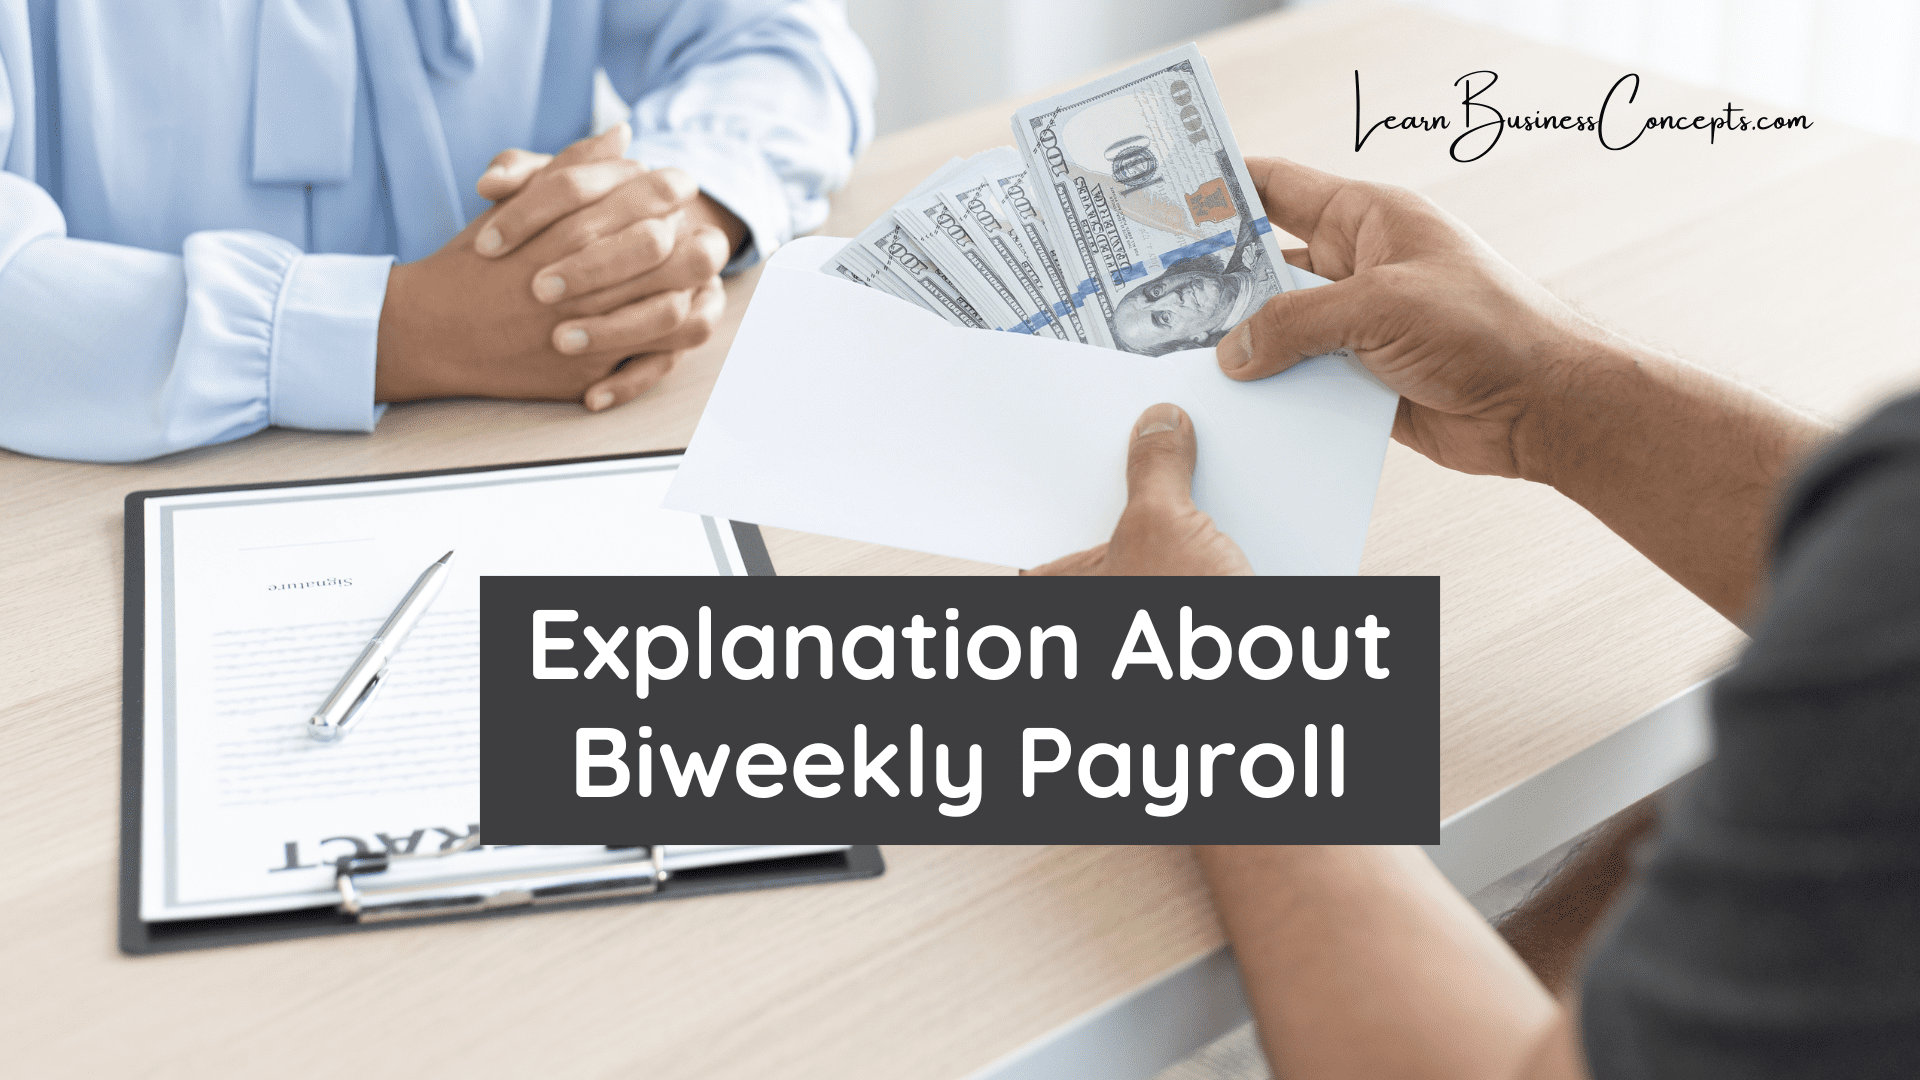 Biweekly Payroll